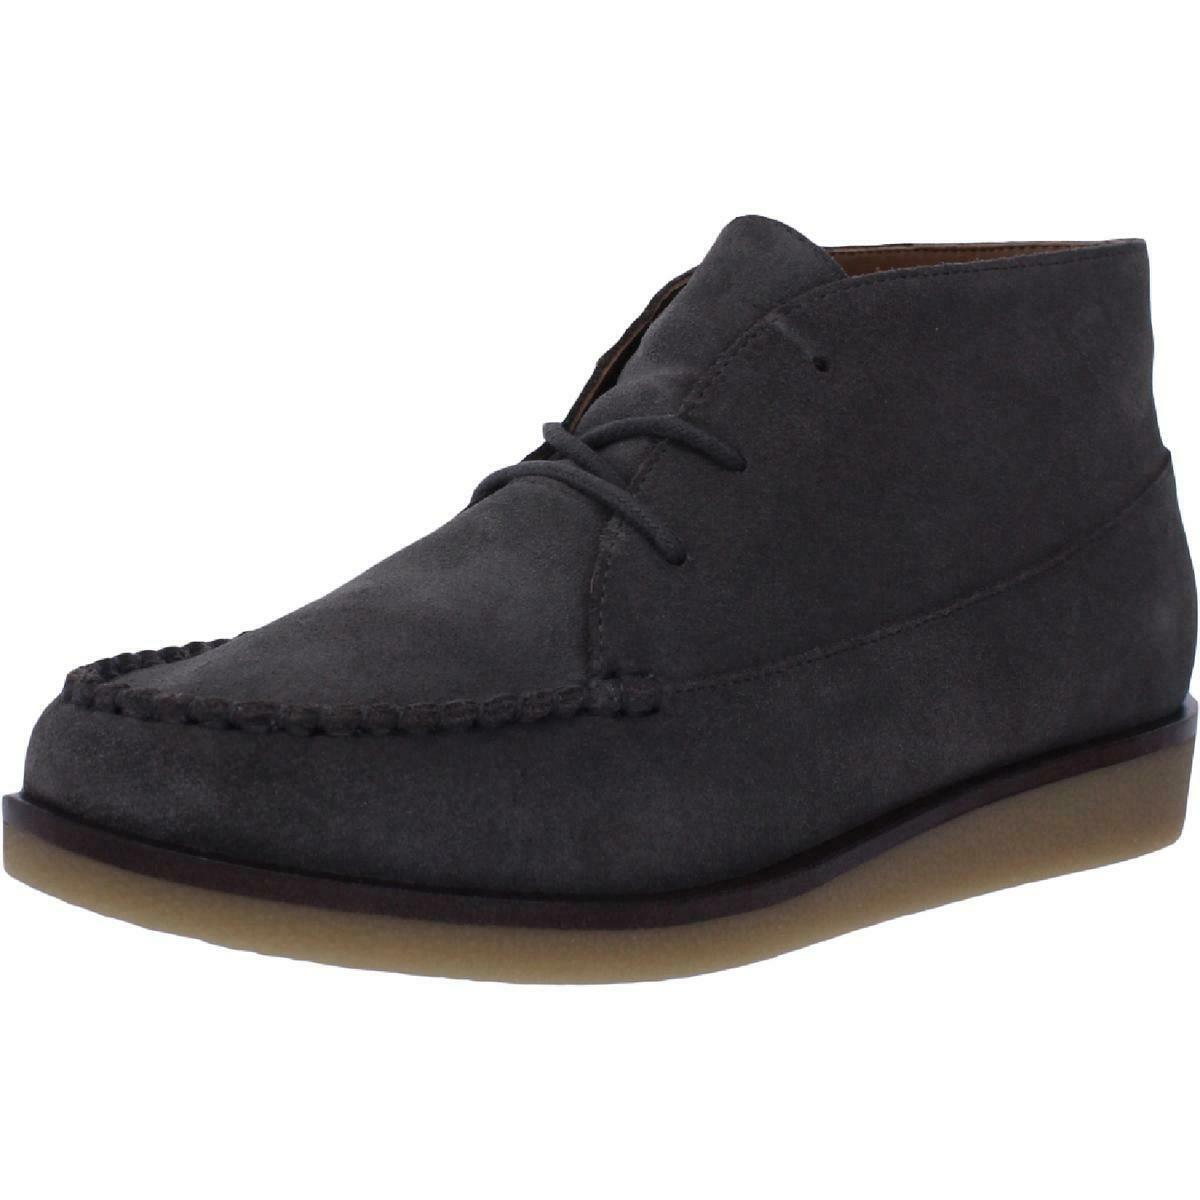 Aerosoles Womens Greenhouse Gray Chukka Boots Shoes 8.5 Medium (B,M) BHFO 6241